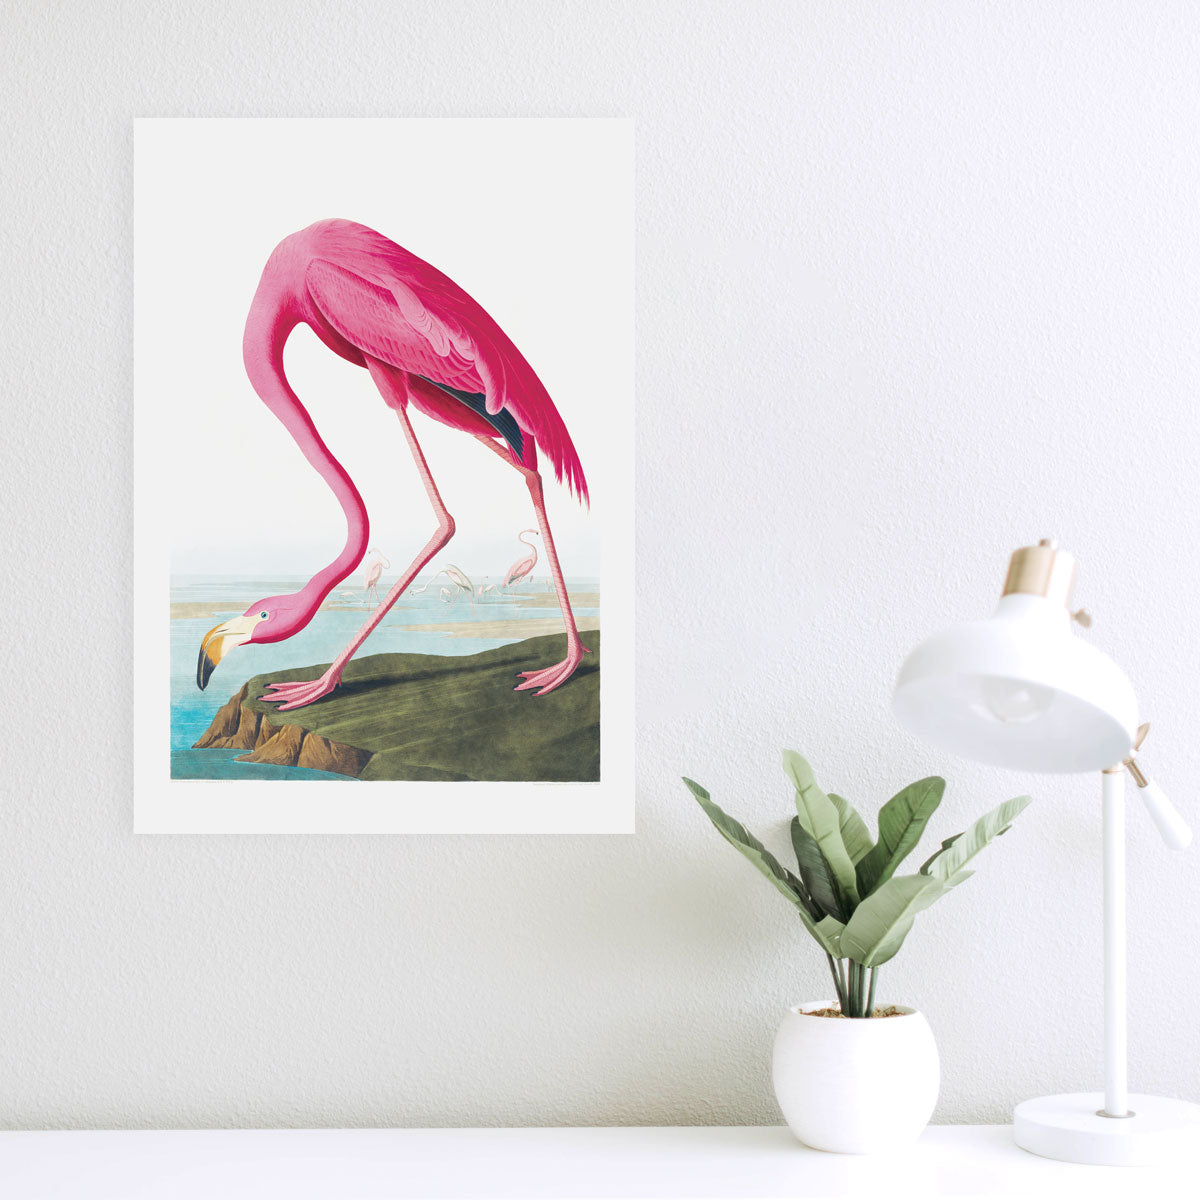 American Flamingo - Fine Art Print - John James Audubon – Vintage Whale